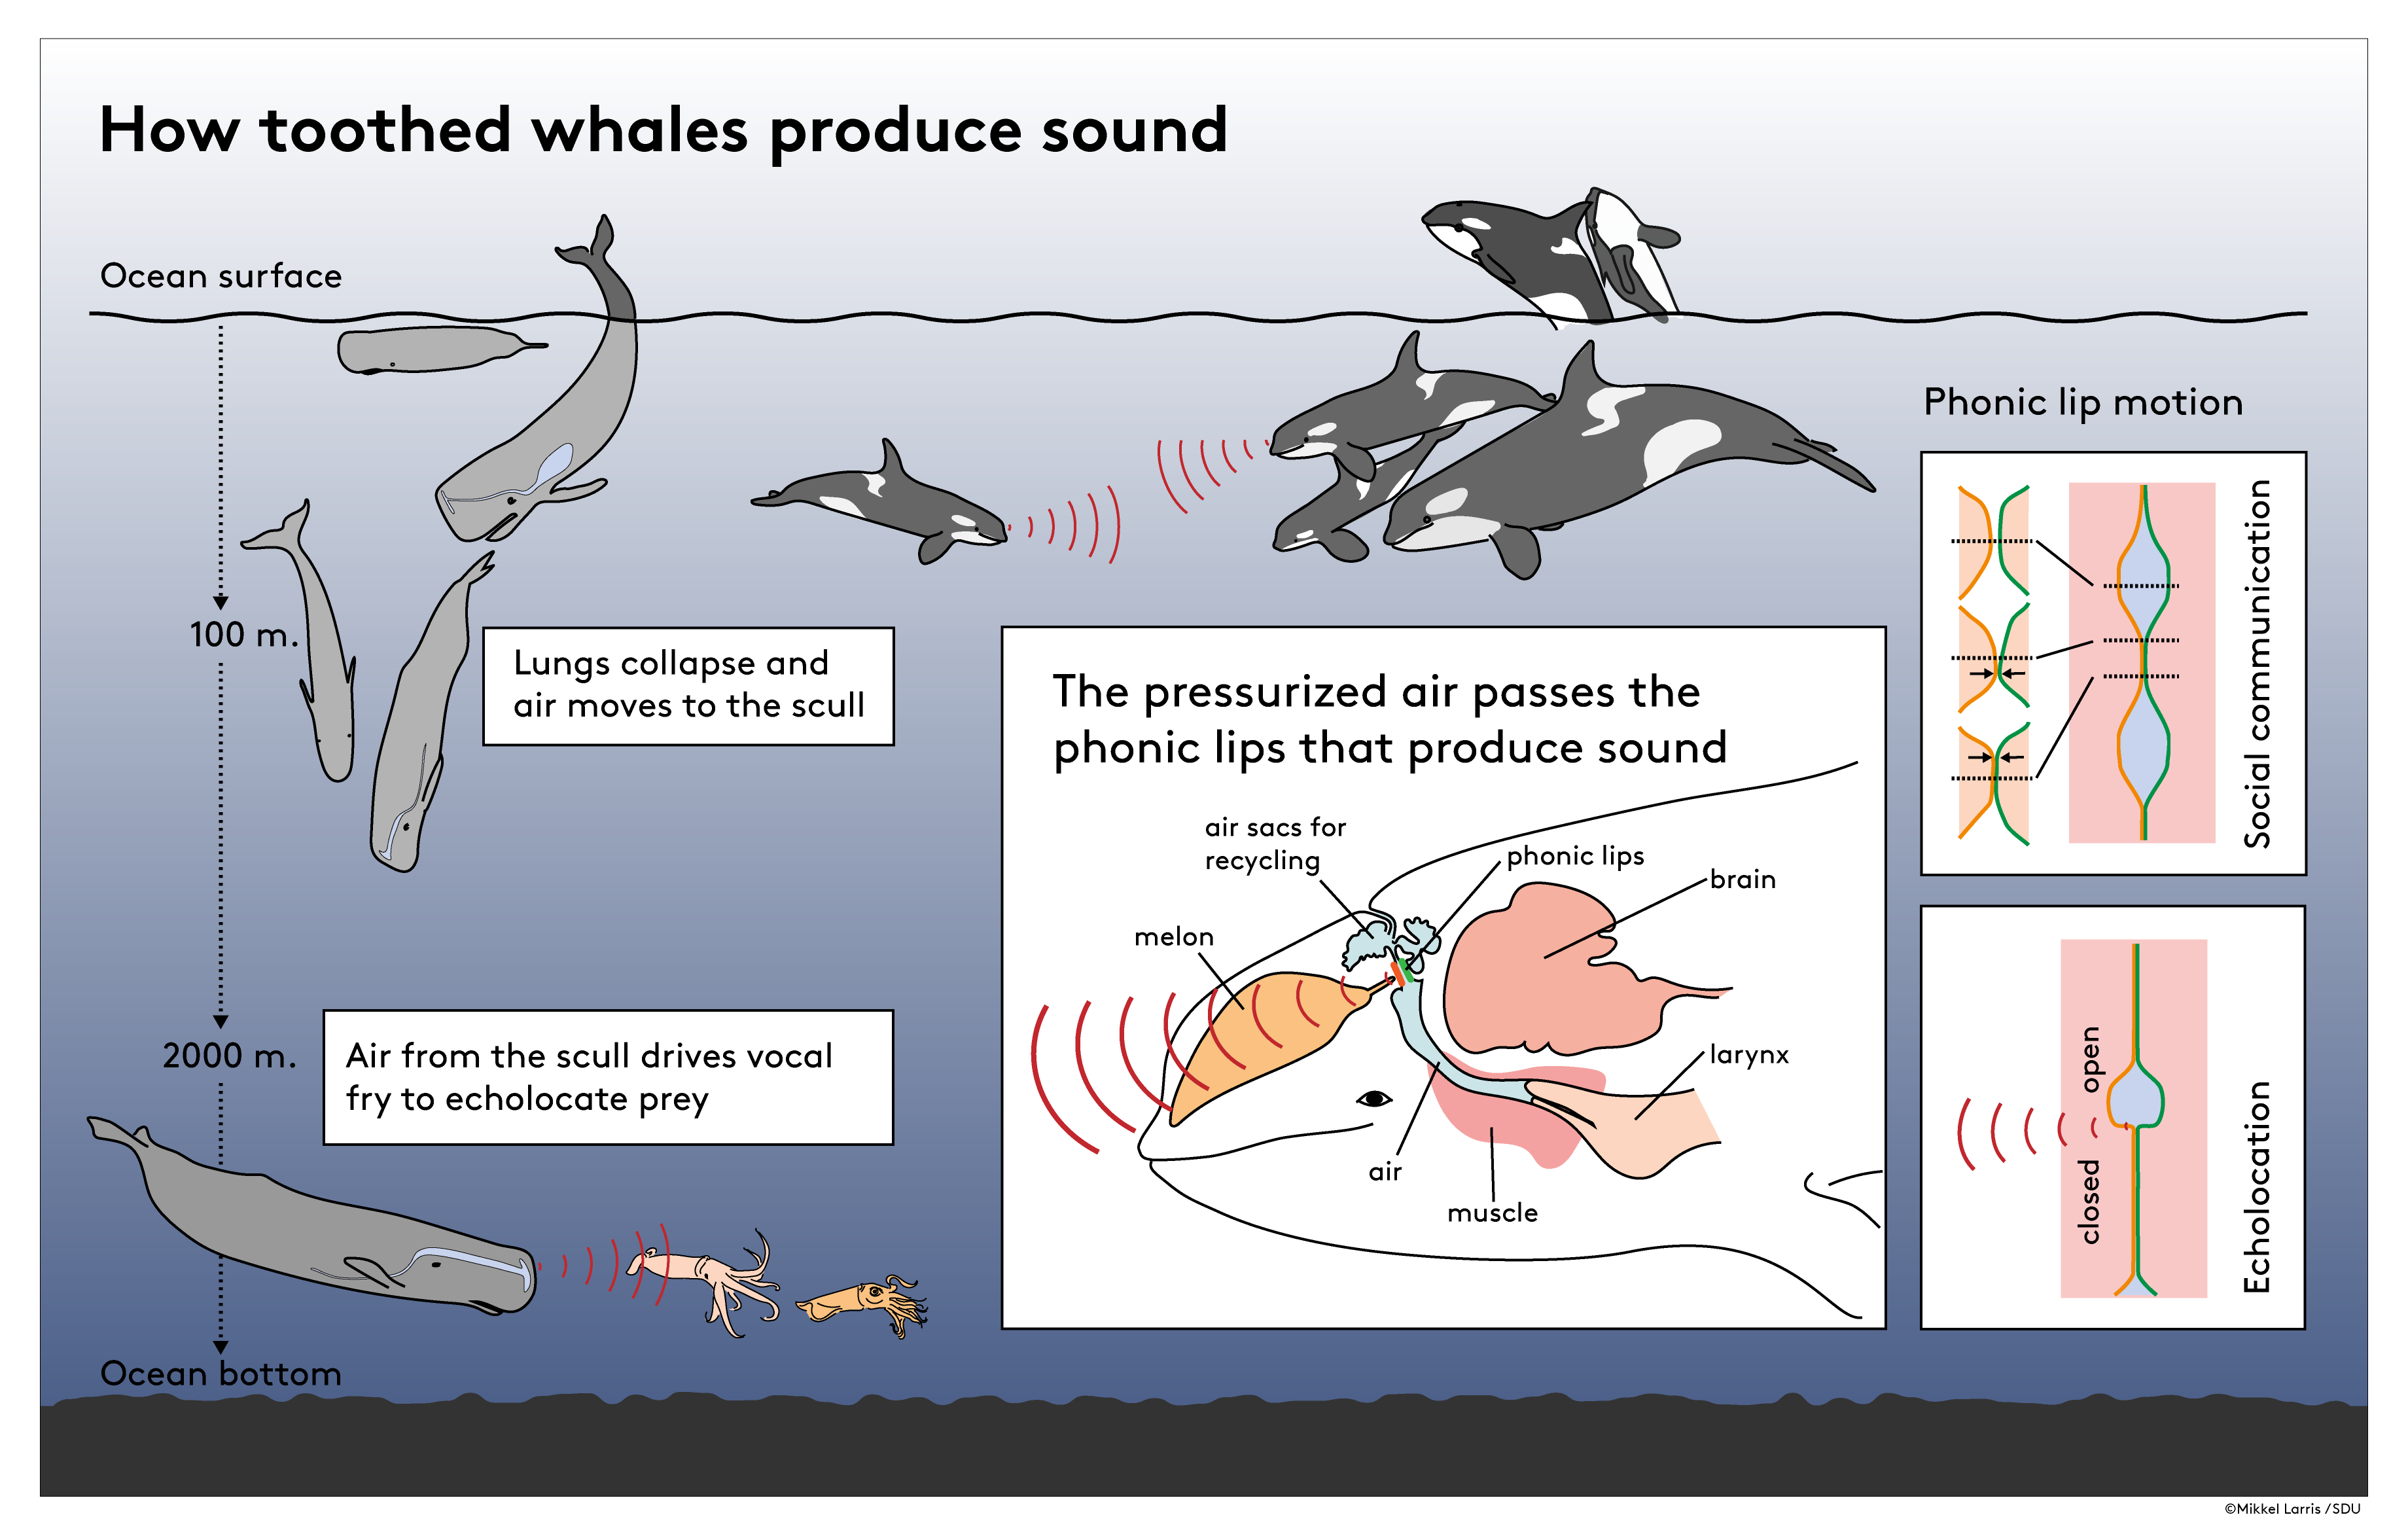 Las ballenas dentadas usan sonidos graves para cazar en las profundidades